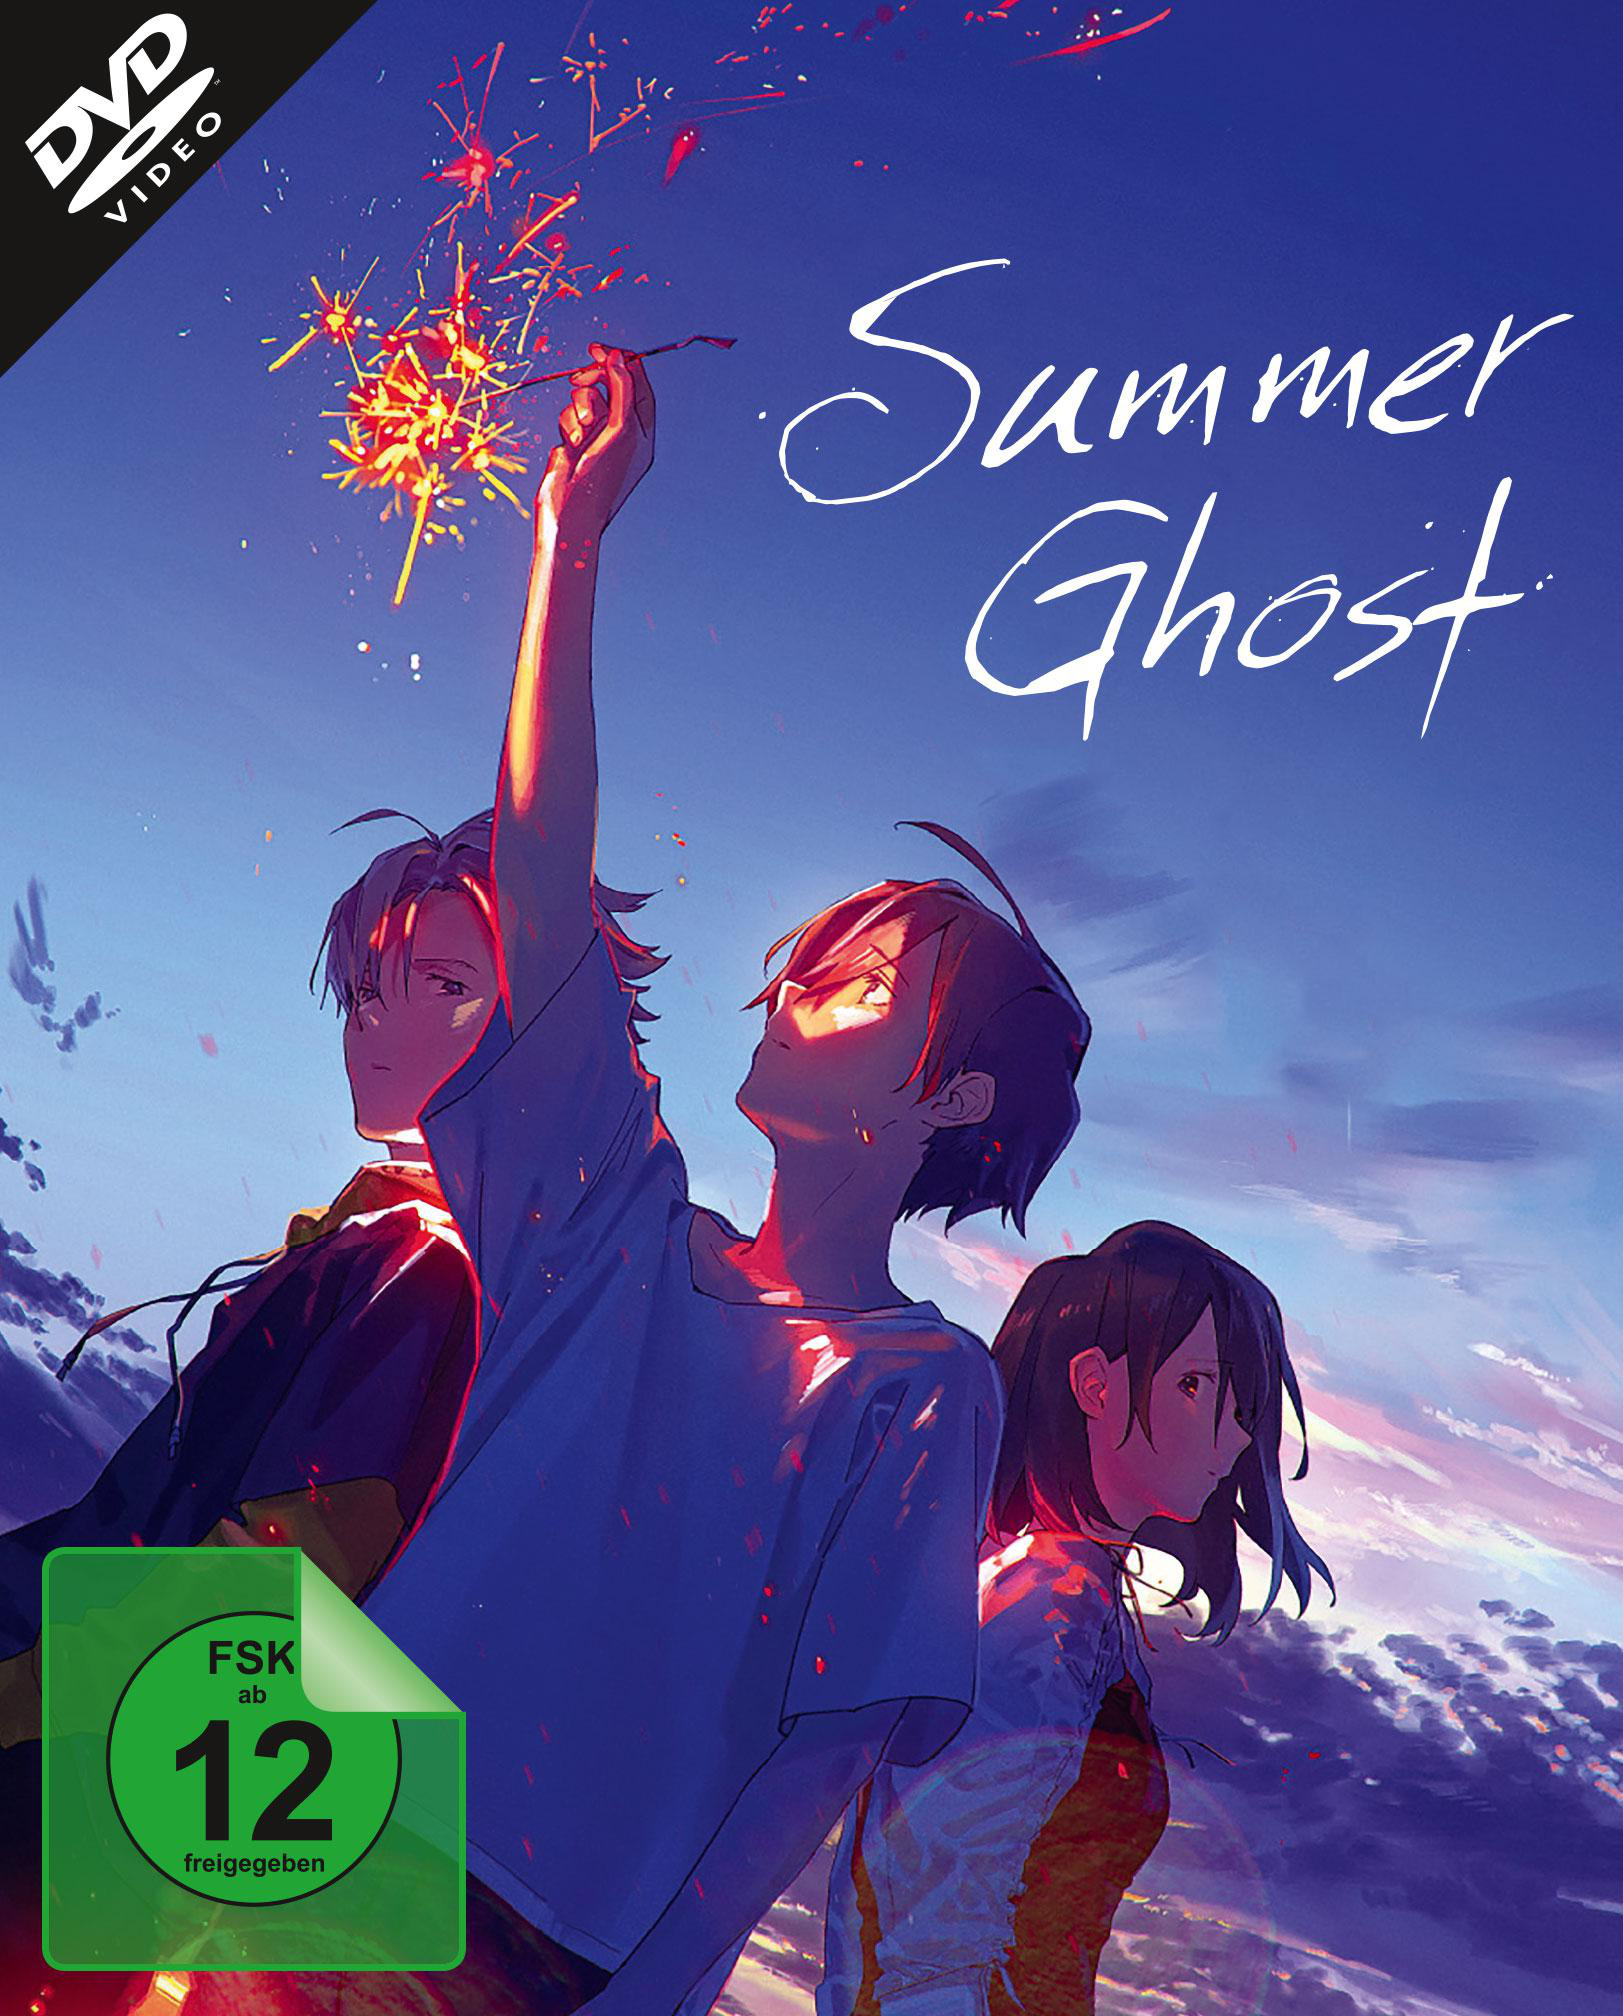 Summer DVD Ghost